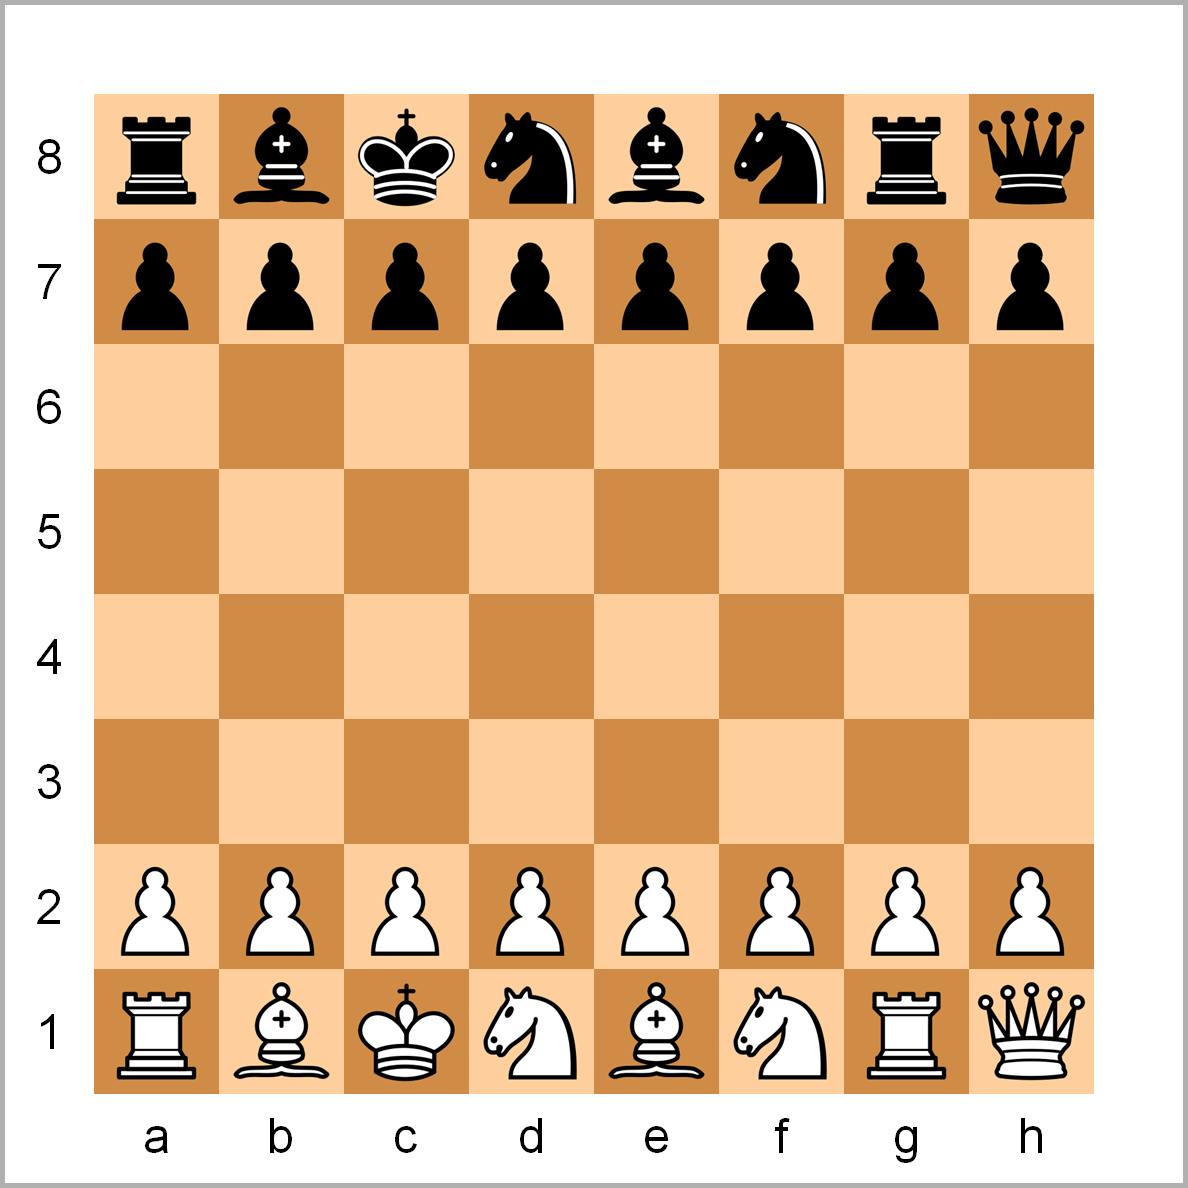 FIDE World Championship Match - Game 1 on lichess.org 